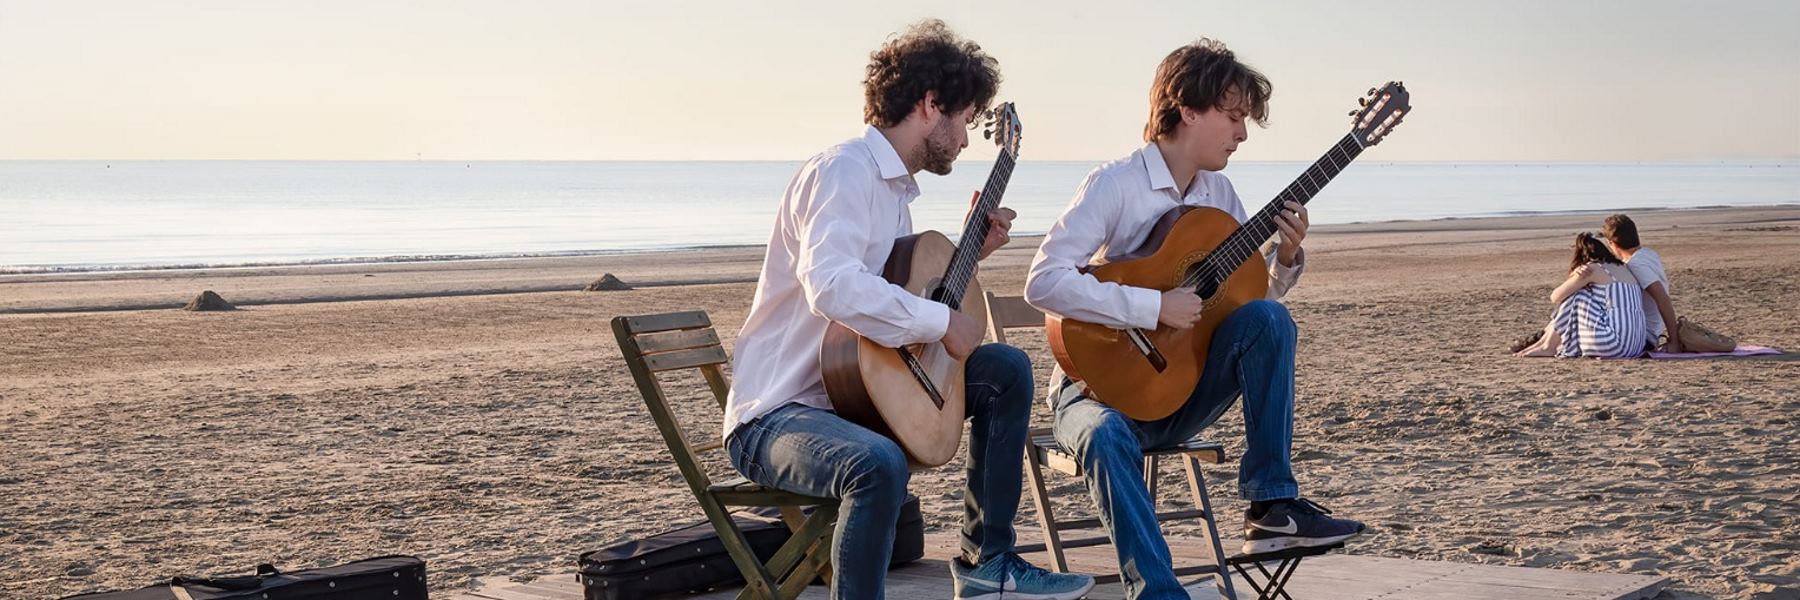 Sunrise concerts on the beach of Pinarella